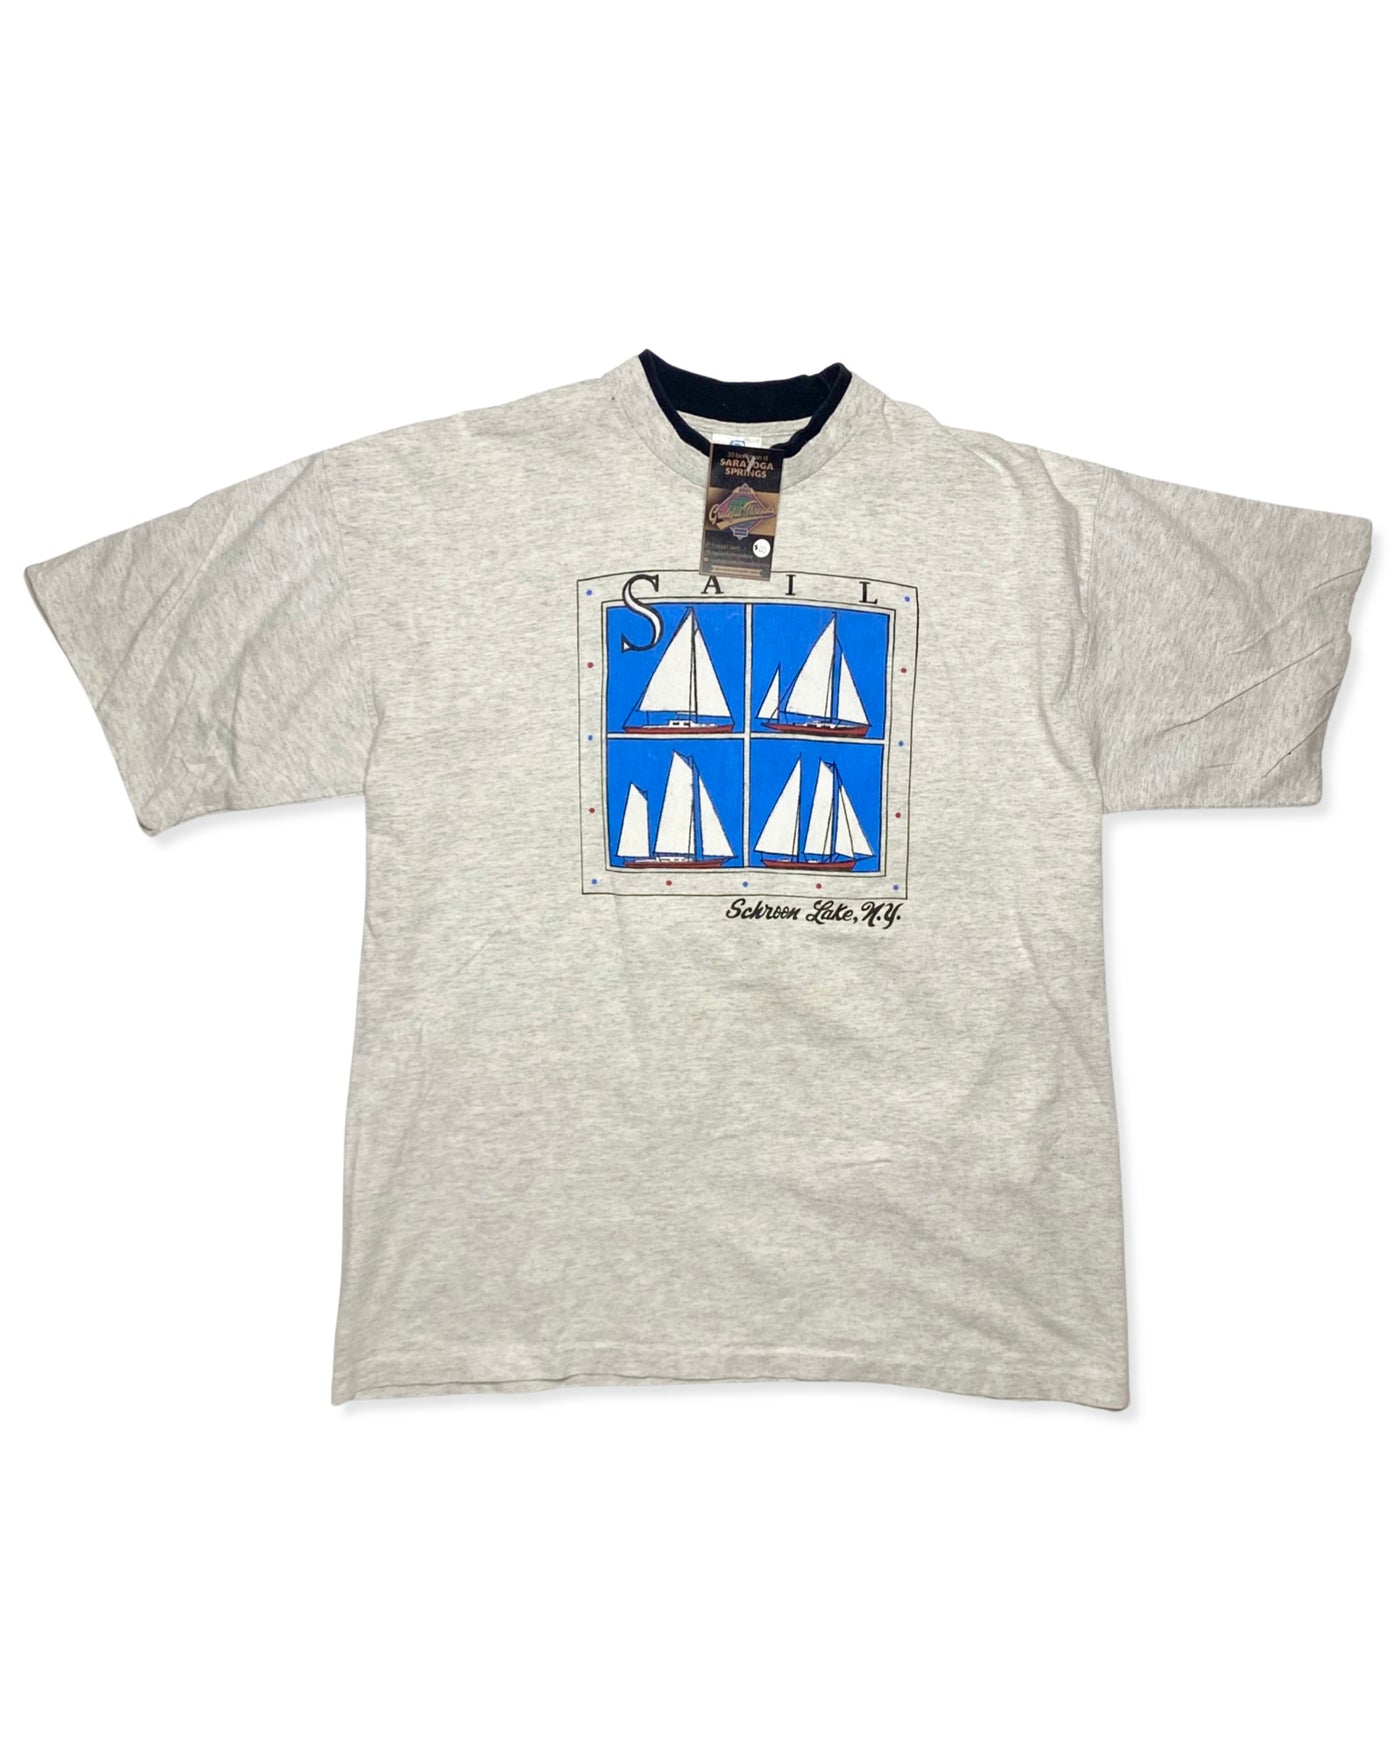 Vintage Schroon Lake NY Sailing T-Shirt